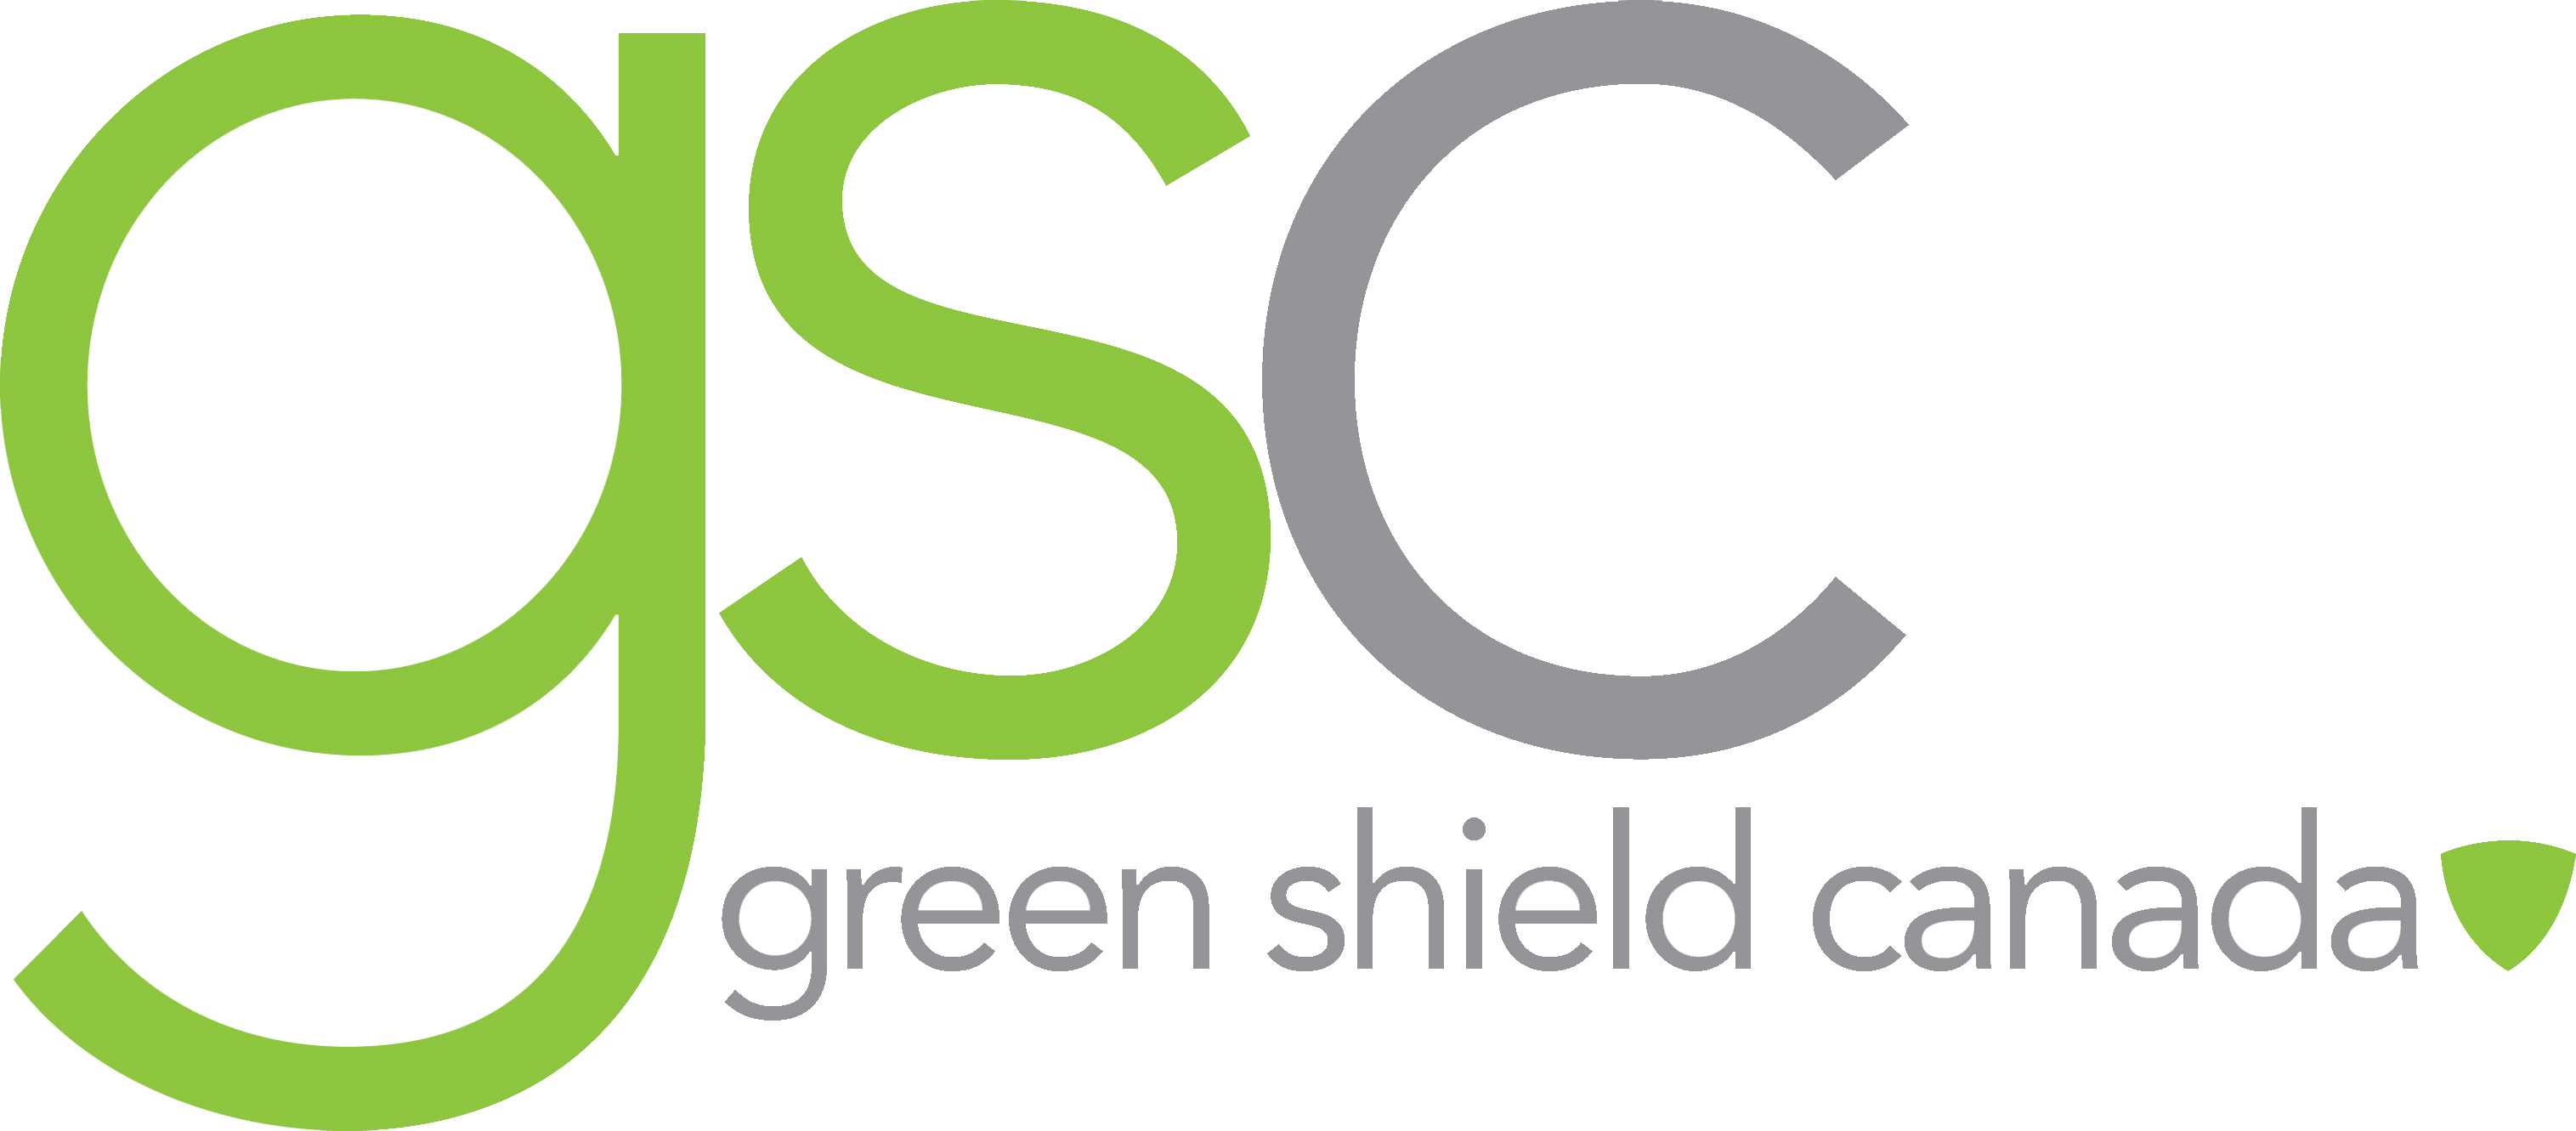 green shield canada logo